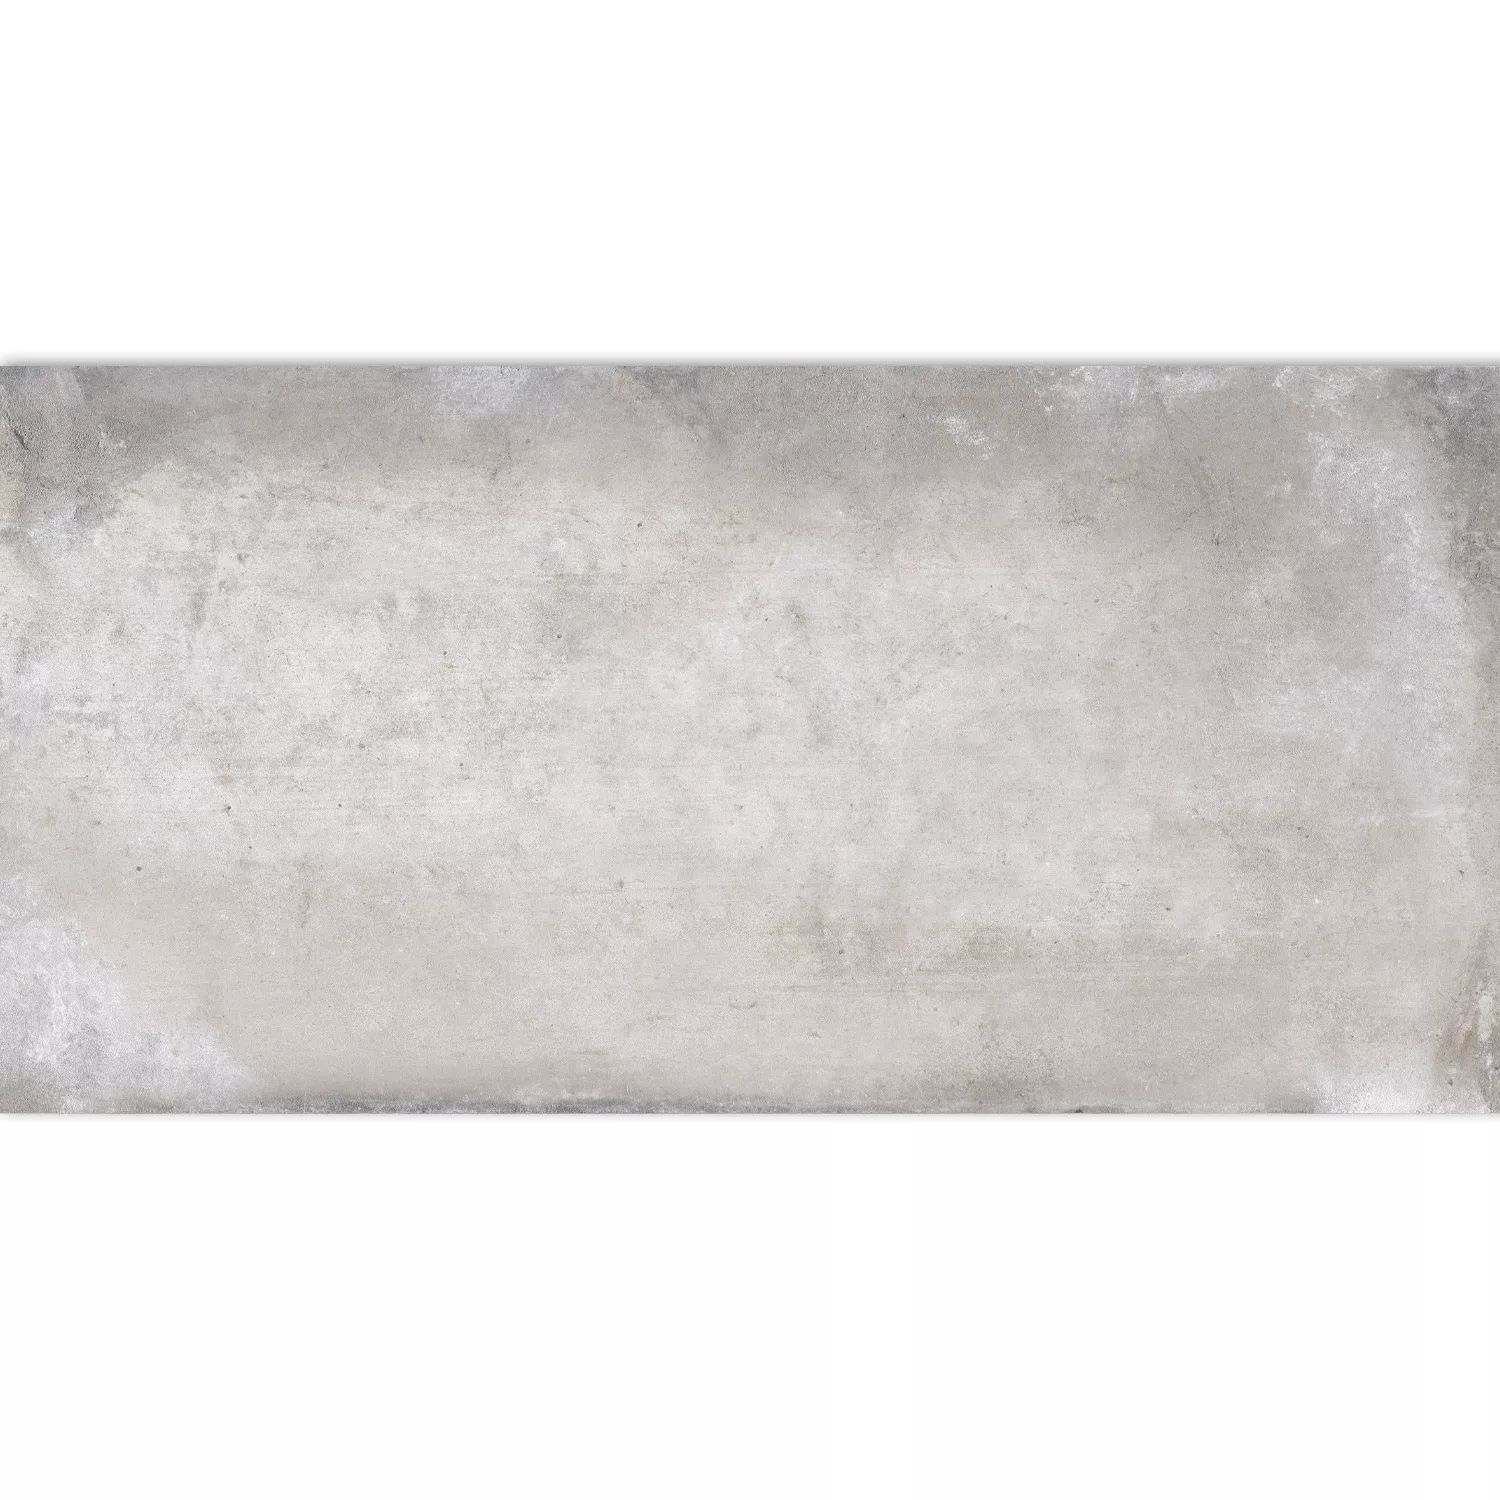 Prov Klinker Cement Optik Maryland Grå 30x60cm